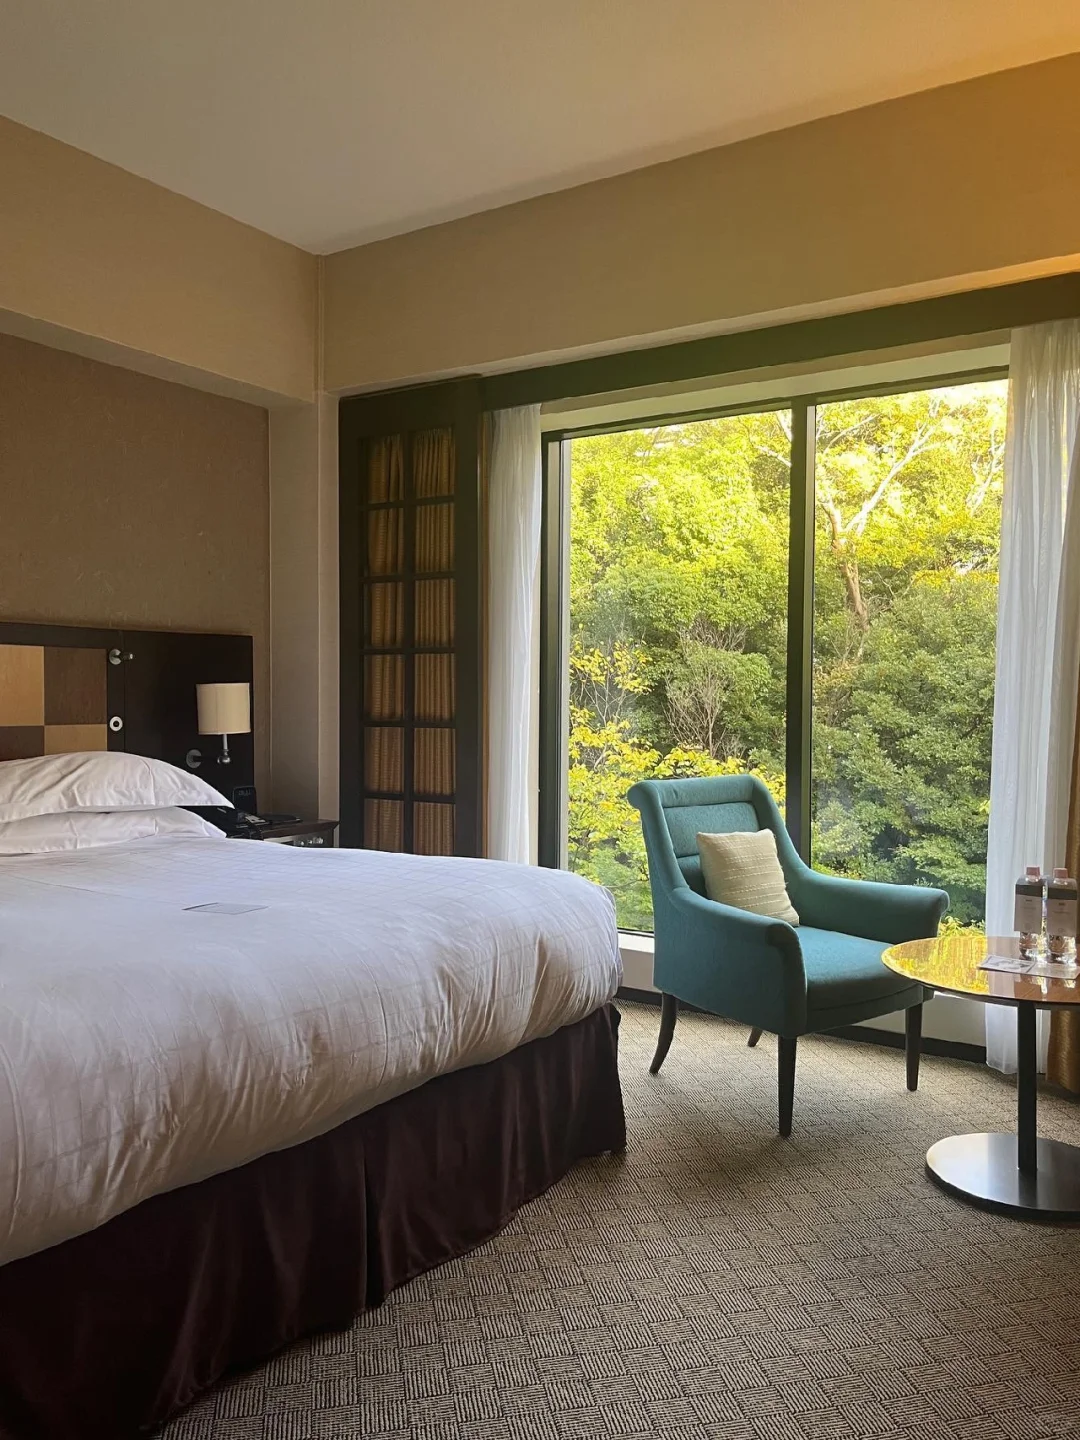 Tokyo-Sheraton Grande Tokyo Bay Hotel, $100 a night, with 5 restaurants and bars